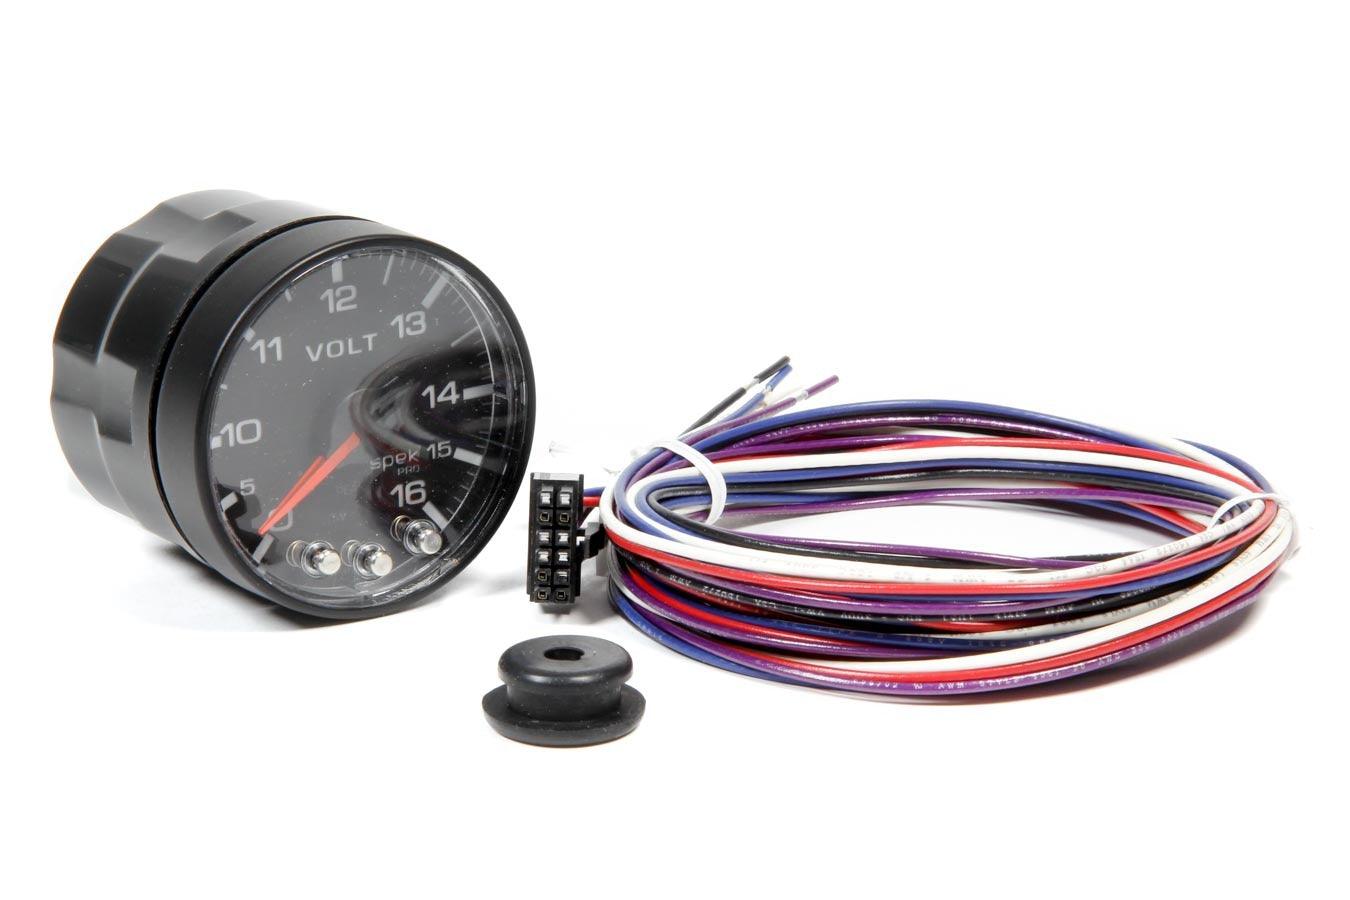 Spek-Pro 2-1/6 Gauge Voltmeter w/Peak Mem. - Burlile Performance Products